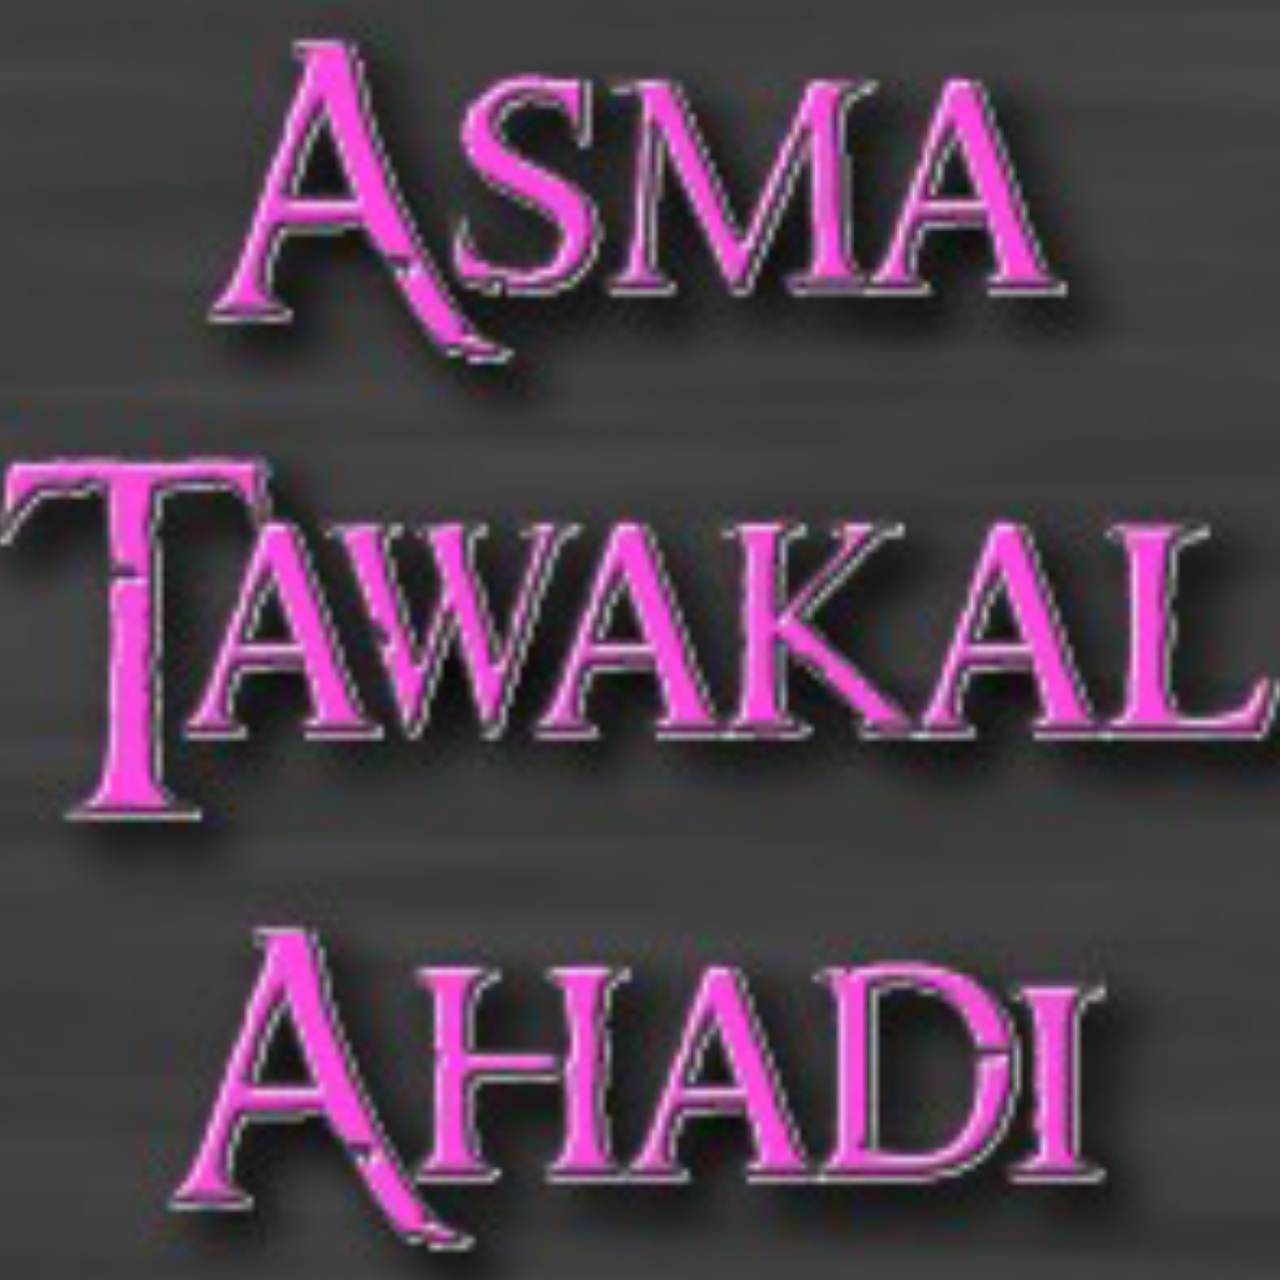 Asma Tawakal Ahadi, seperti tepat pada namanya Tawakal